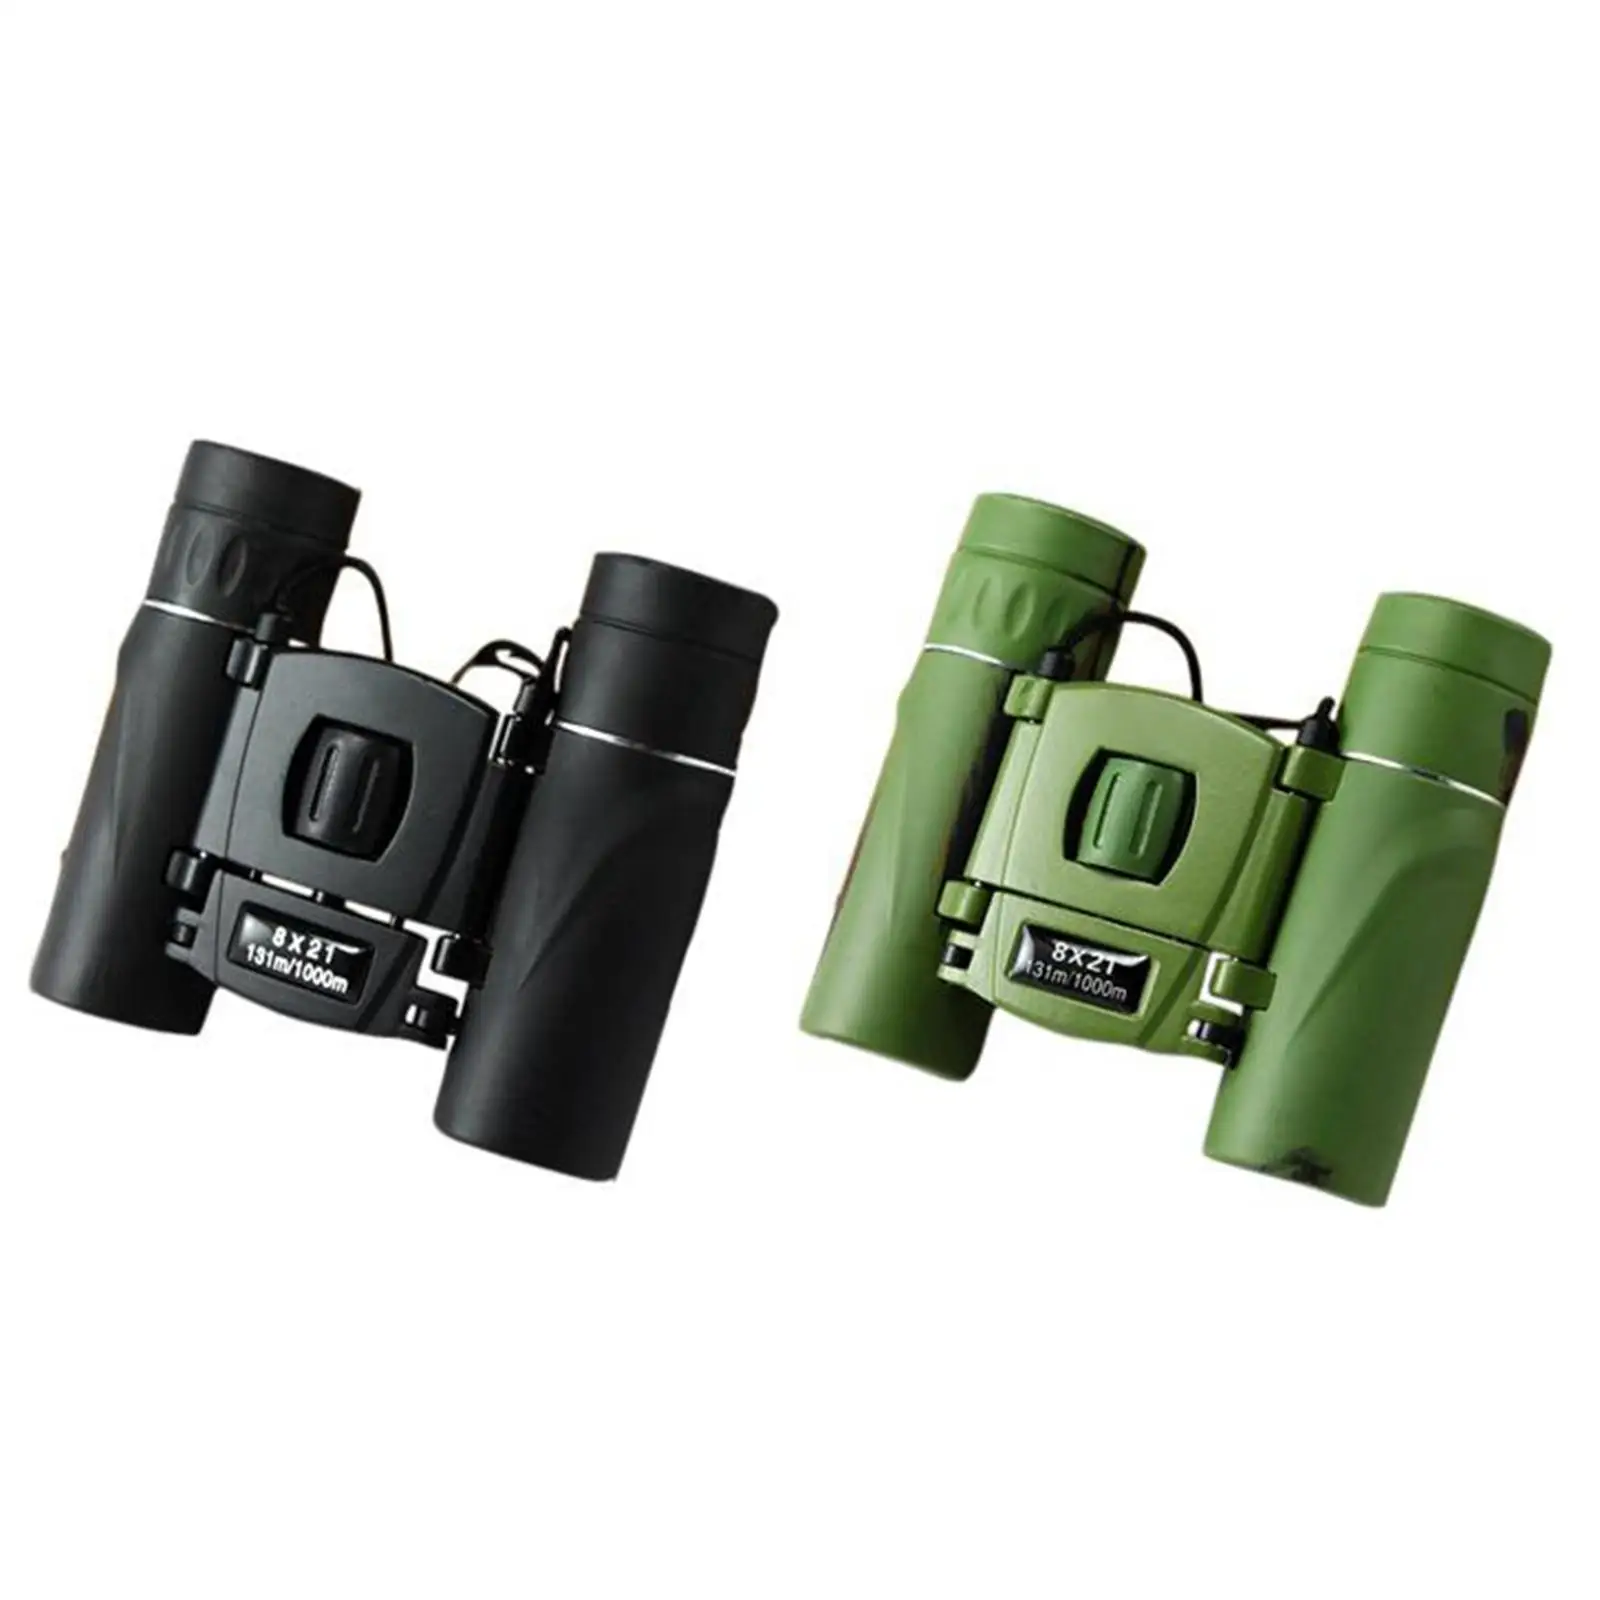 8X21 Binoculars for, Small Pocket Binoculars Mini Waterproof Folding